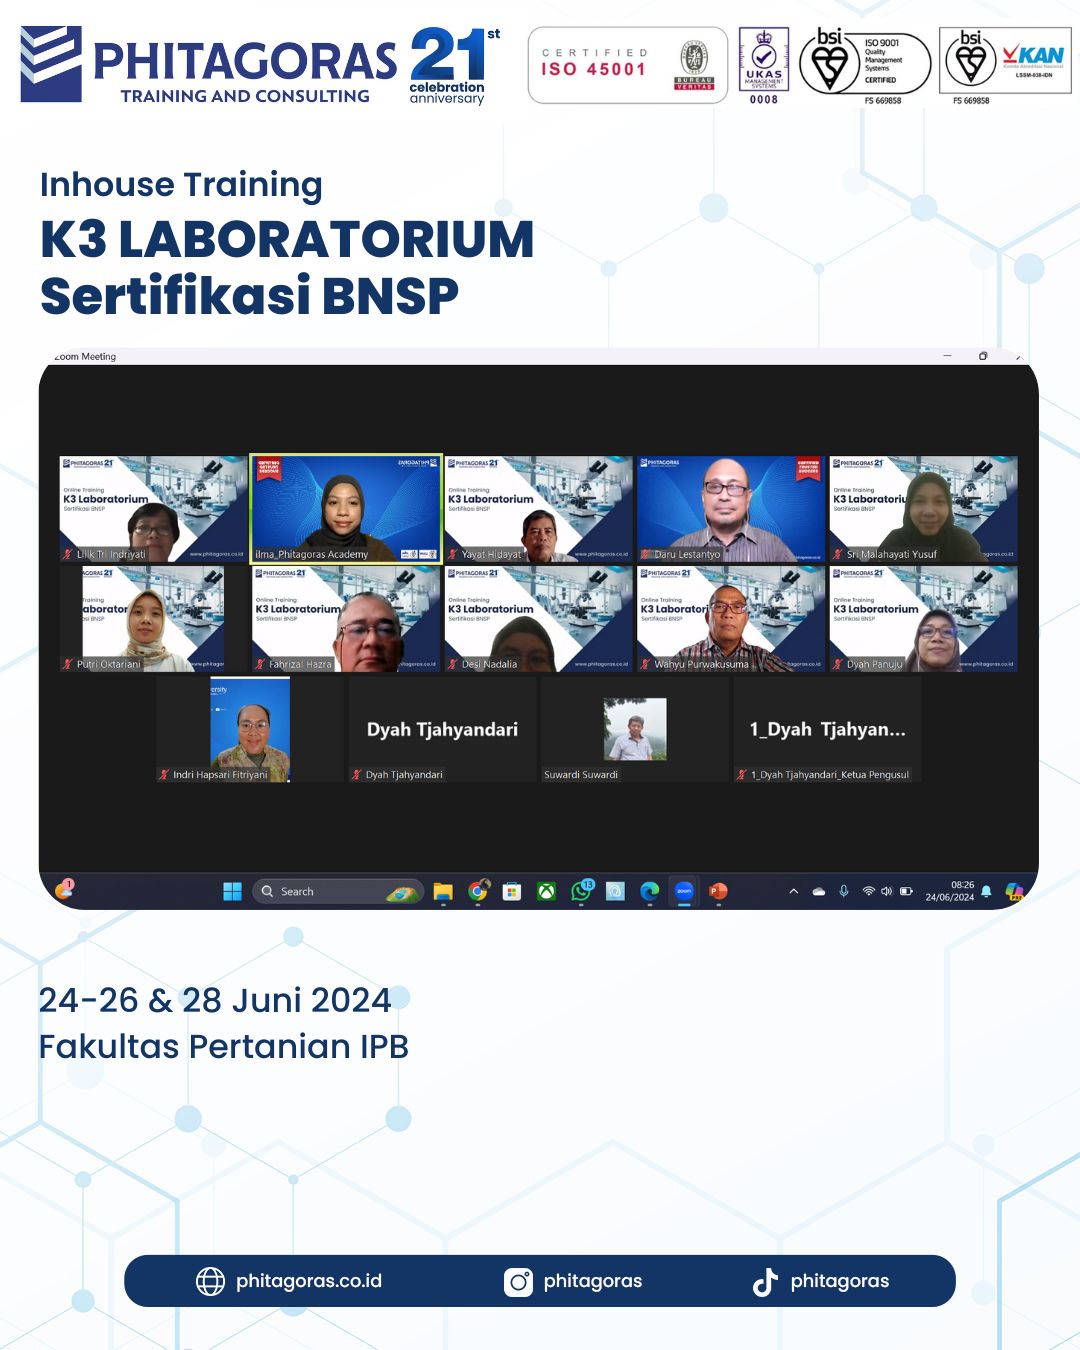 Inhouse Training K3 Laboratorium Sertifikasi BNSP - Fakultas Pertanian IPB 24-26 & 28 Juni 2024.